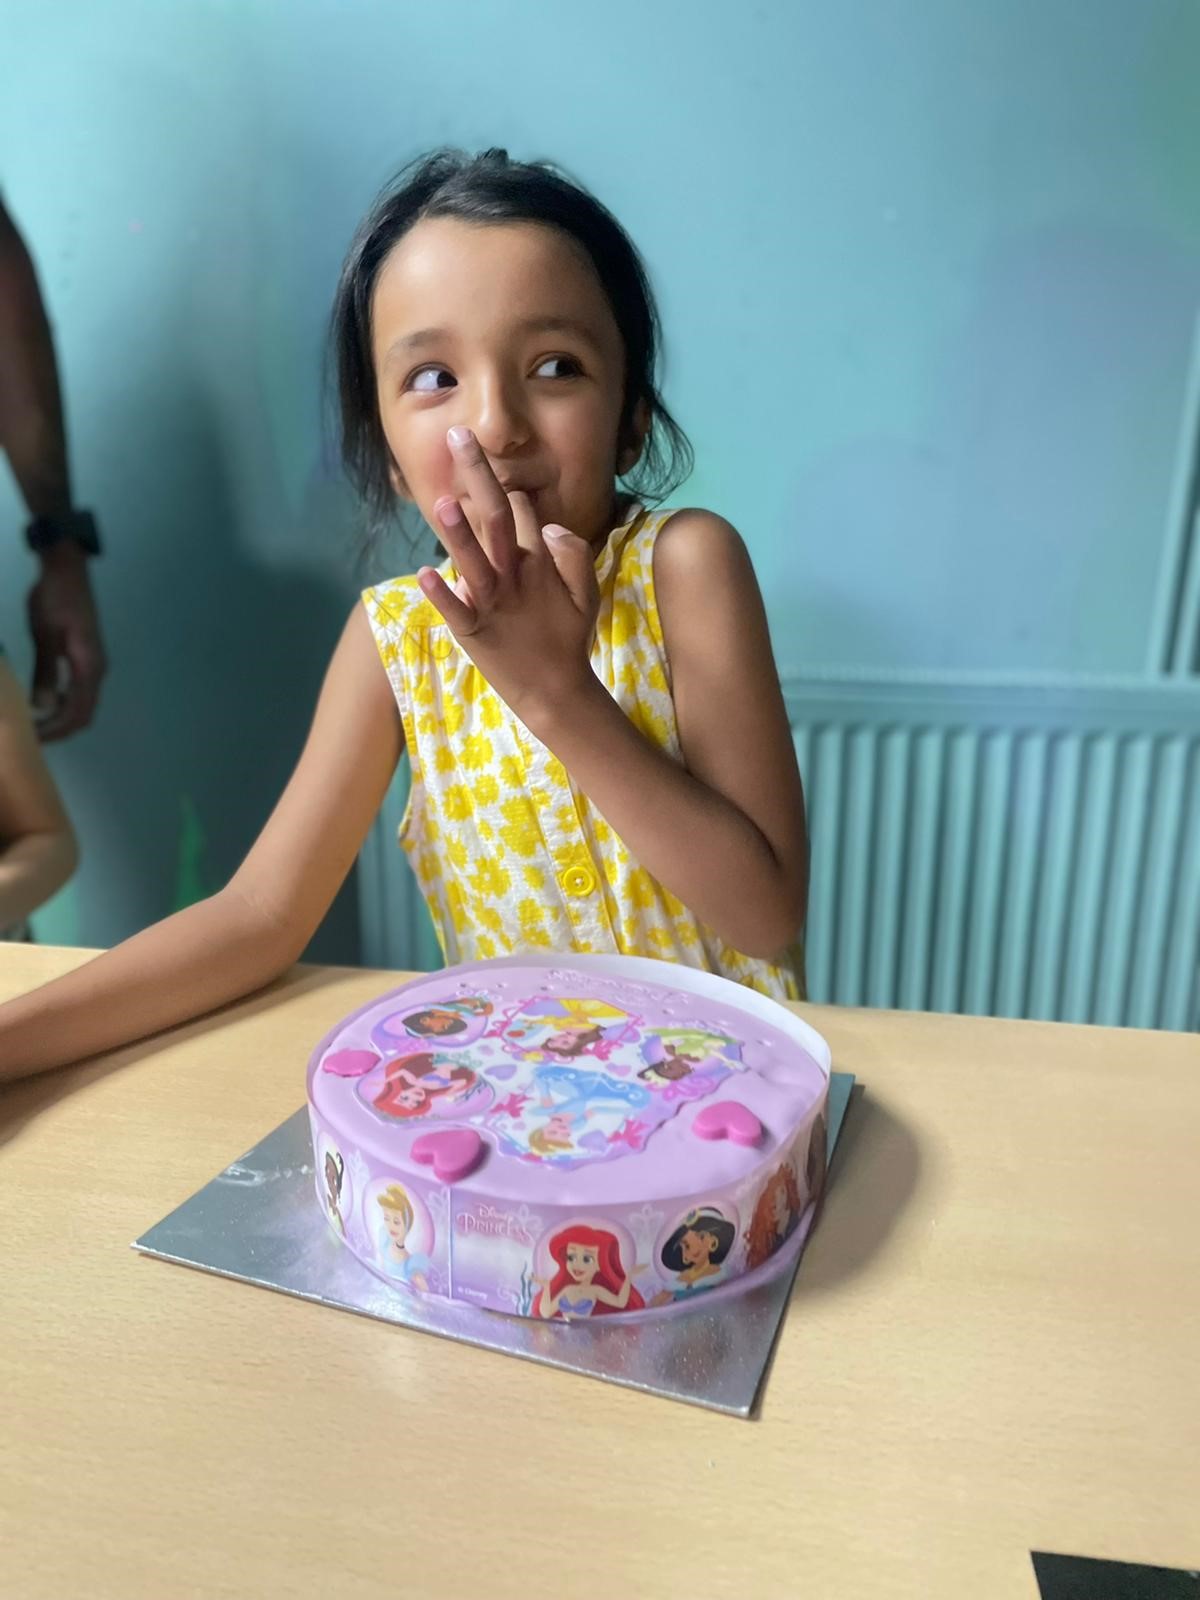 Daya with a Disney princess cake for her 7th birthday